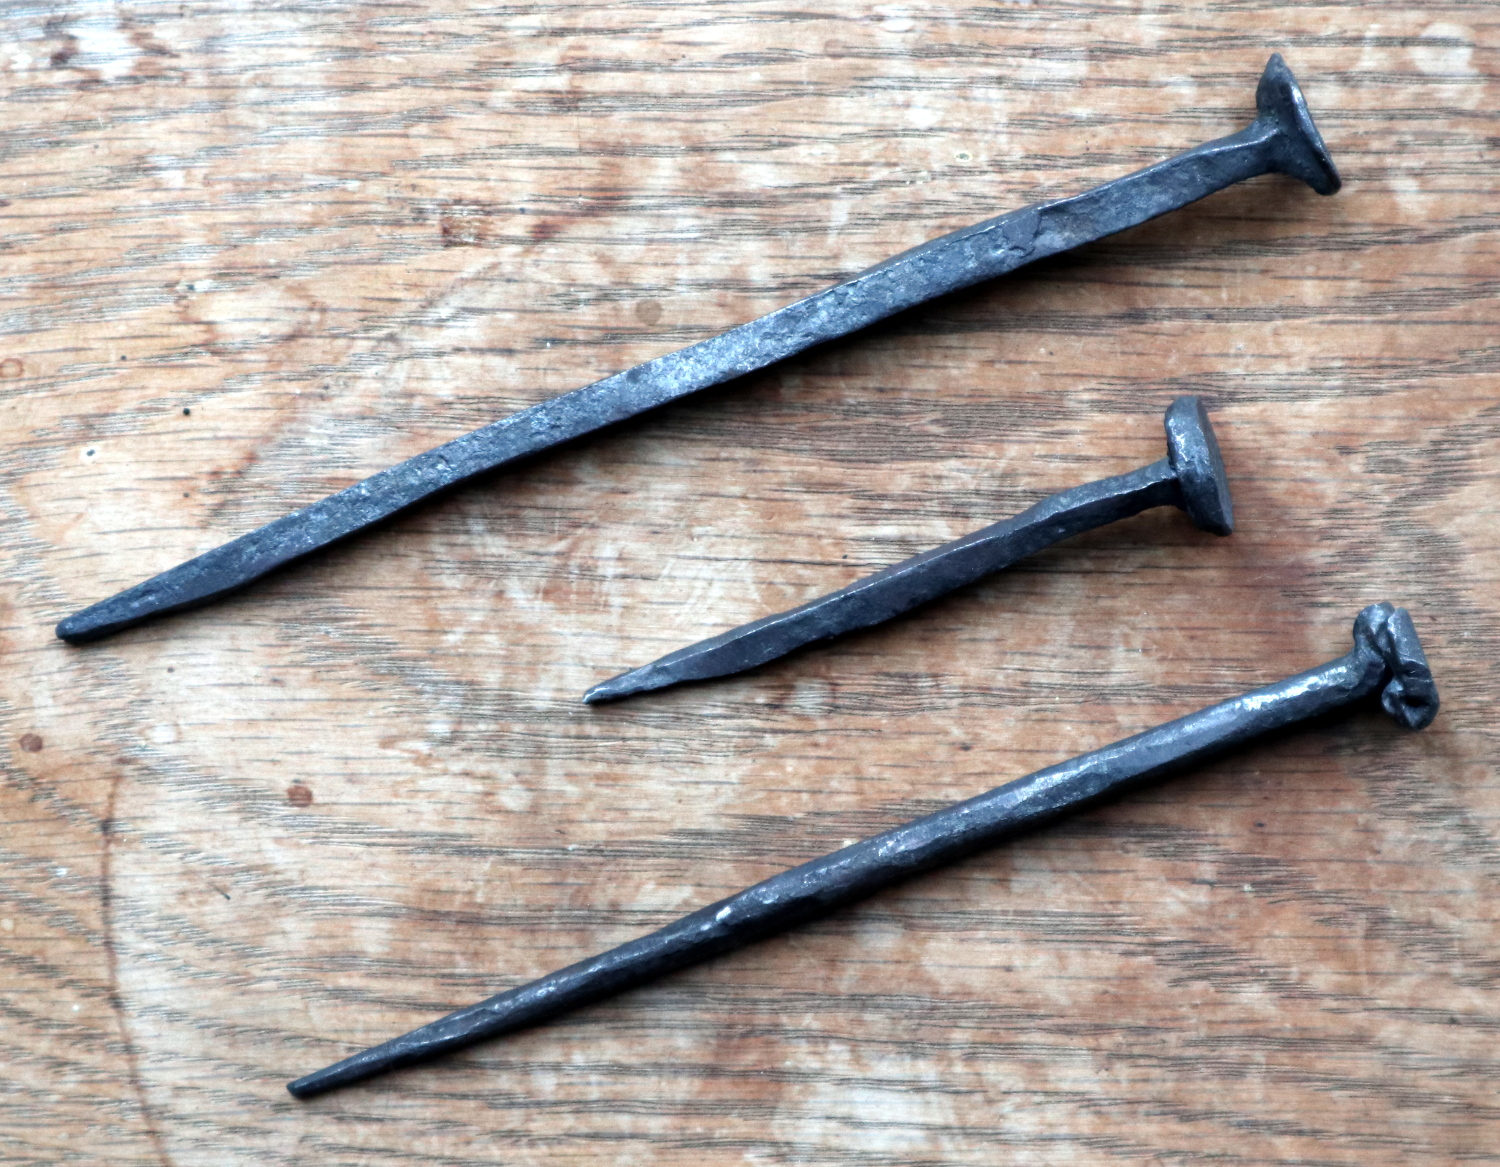 mediaeval nail three nails on wood